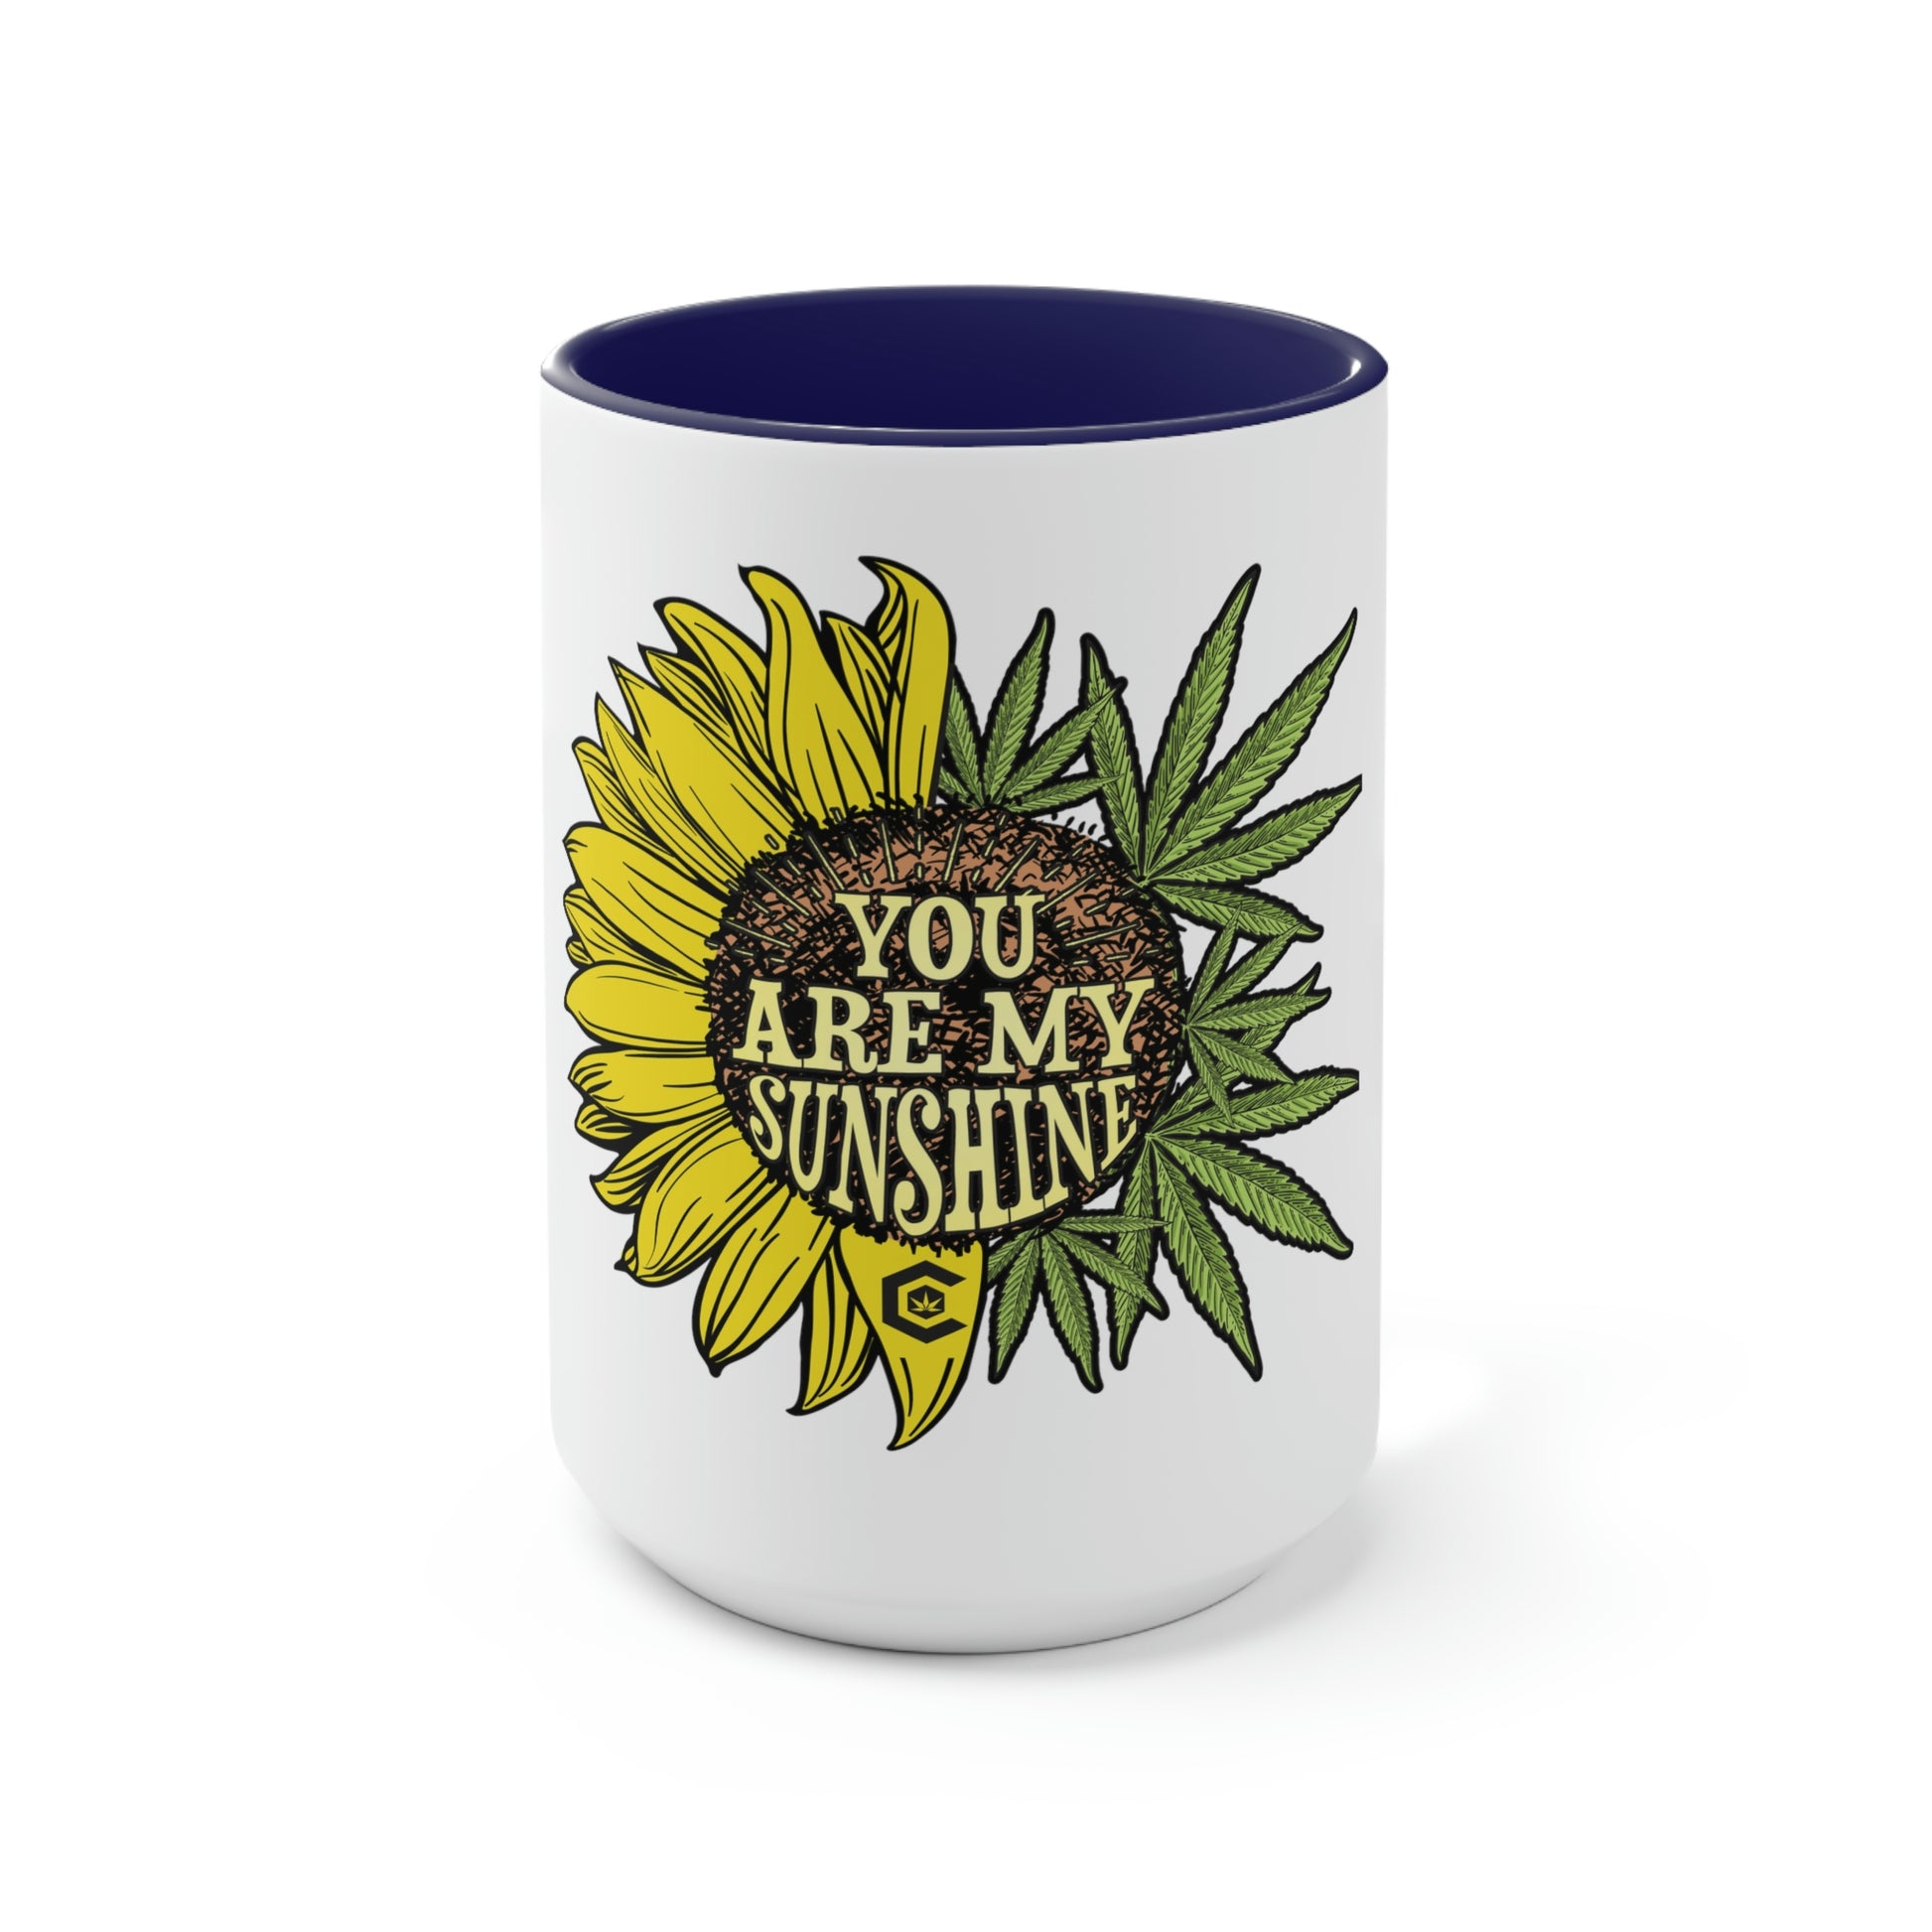 You Are My Sunshine Coffee Mug is the product.